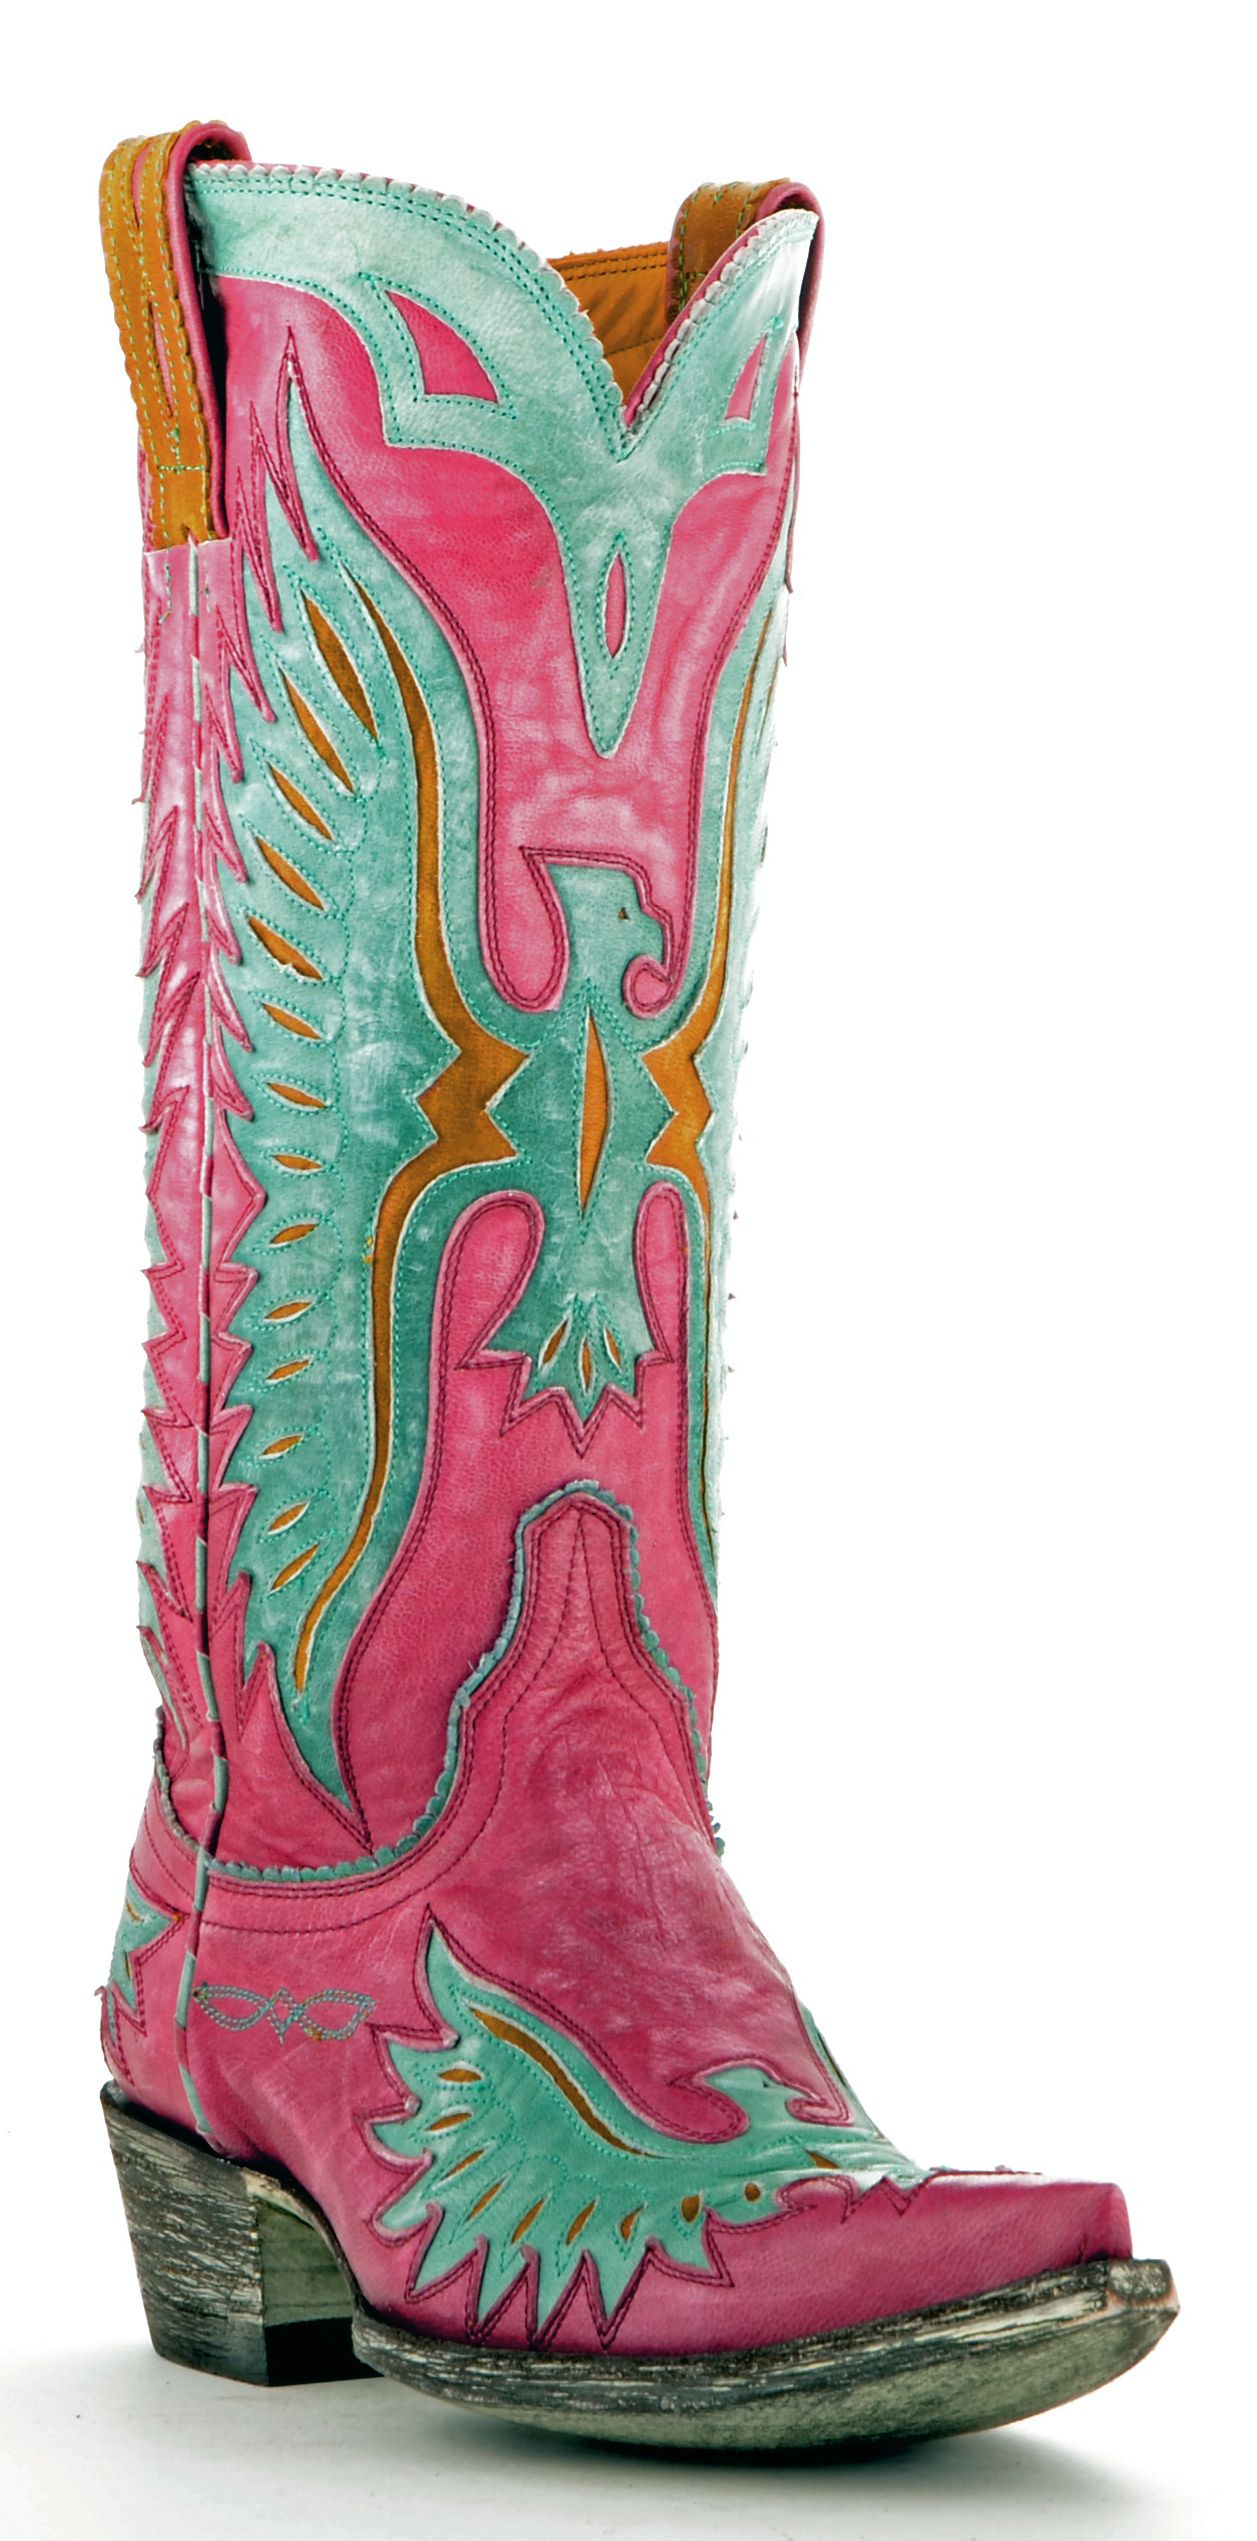 Old Gringo Eagle Boots in Pink & Aqua